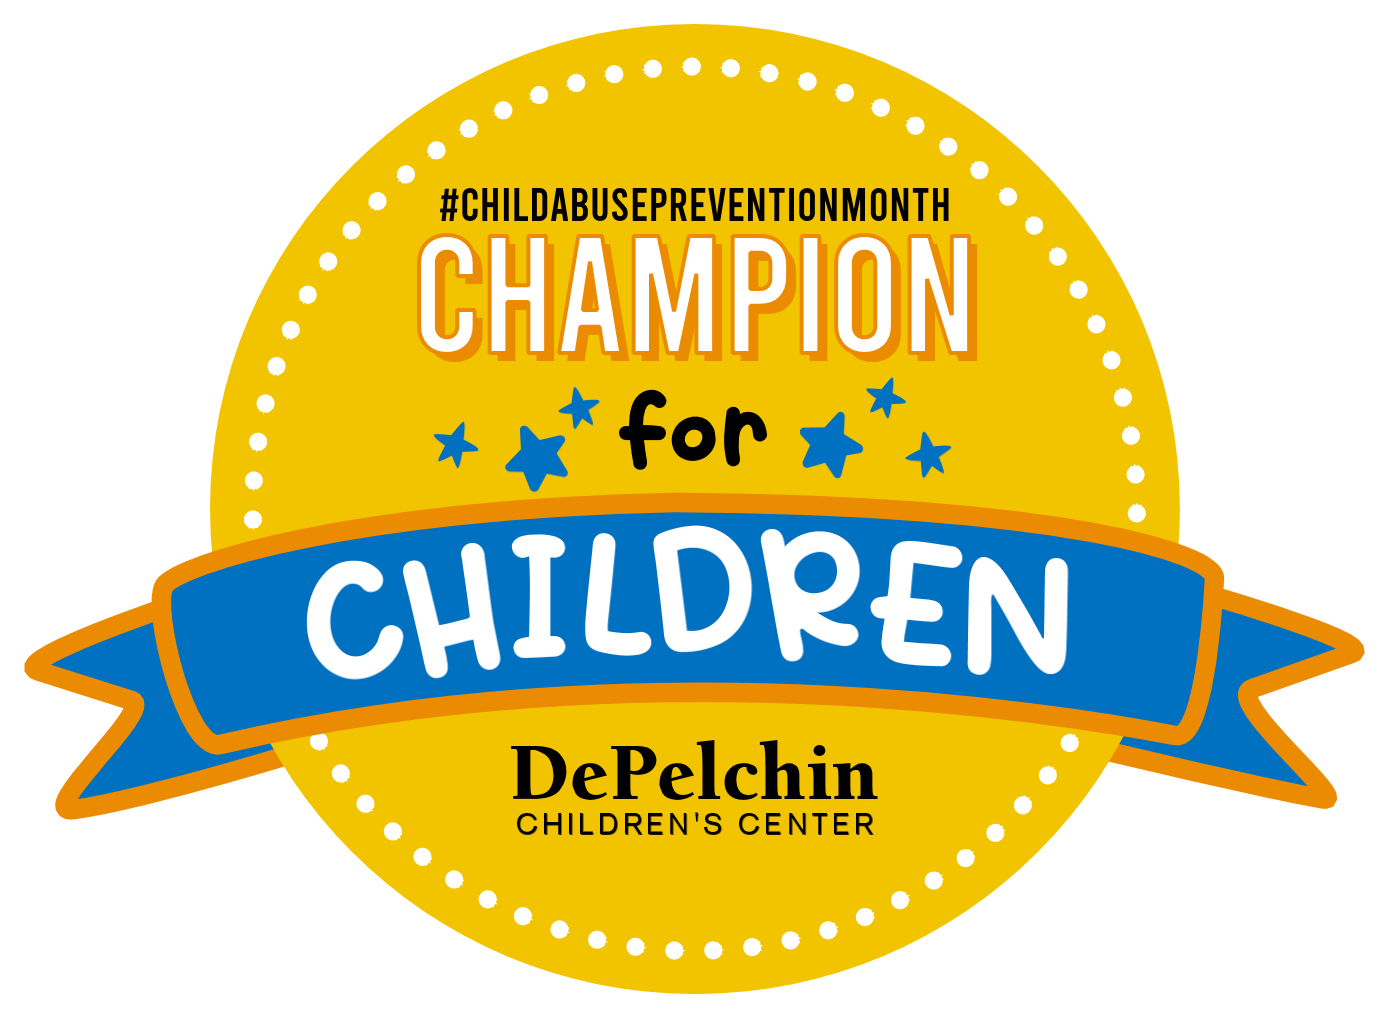 Champion for children badge